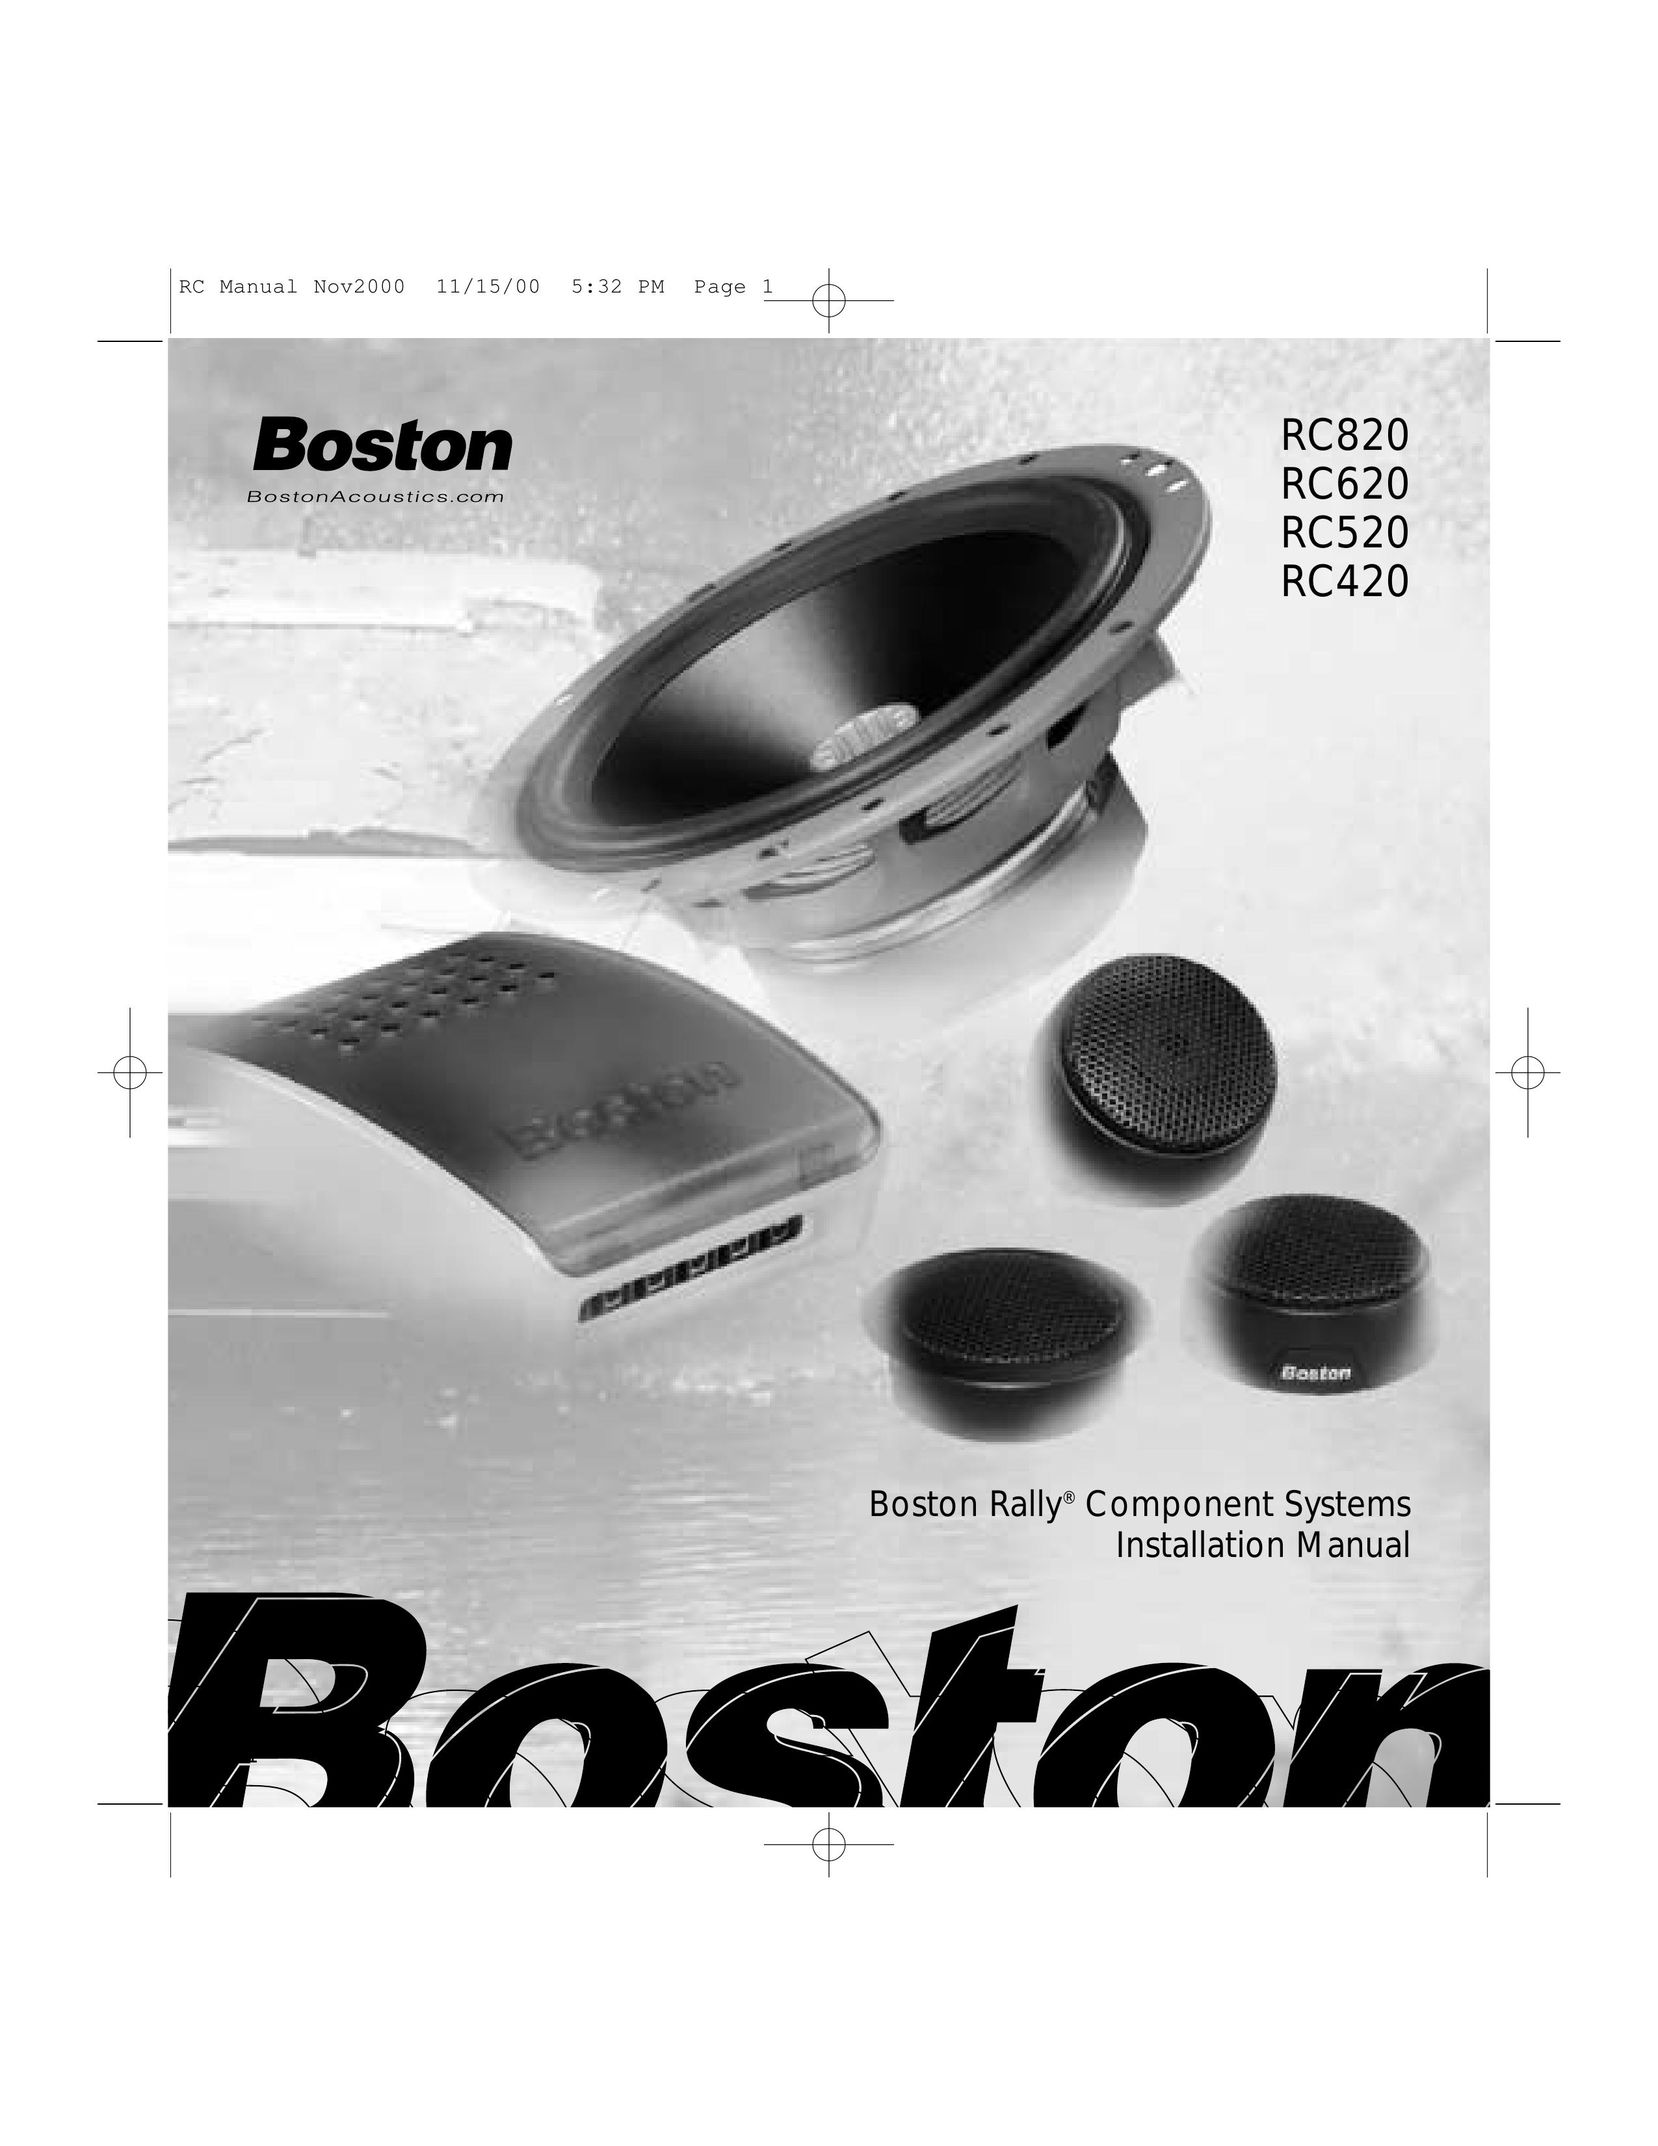 Boston Acoustics RC420 Car Speaker User Manual